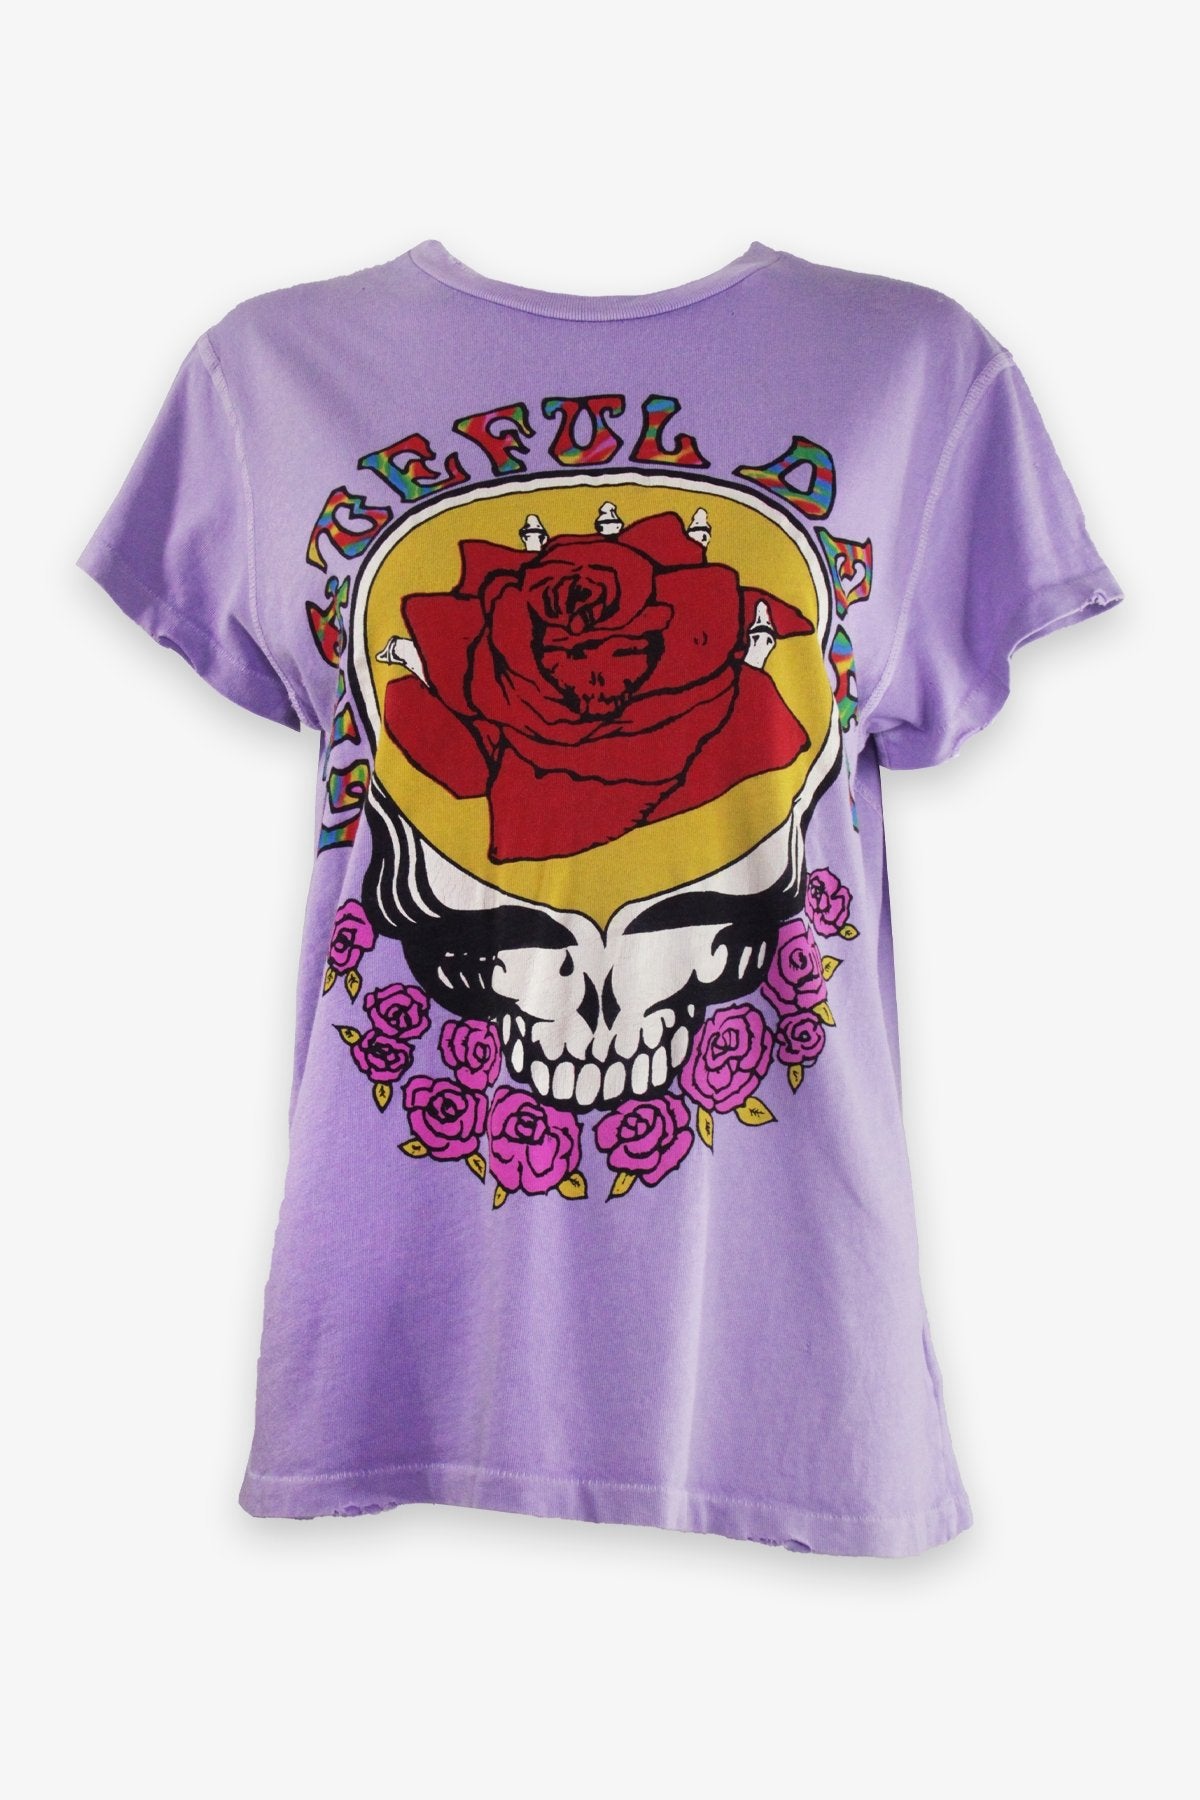 Grateful Dead Unisex T-Shirt in Lilac - shop-olivia.com